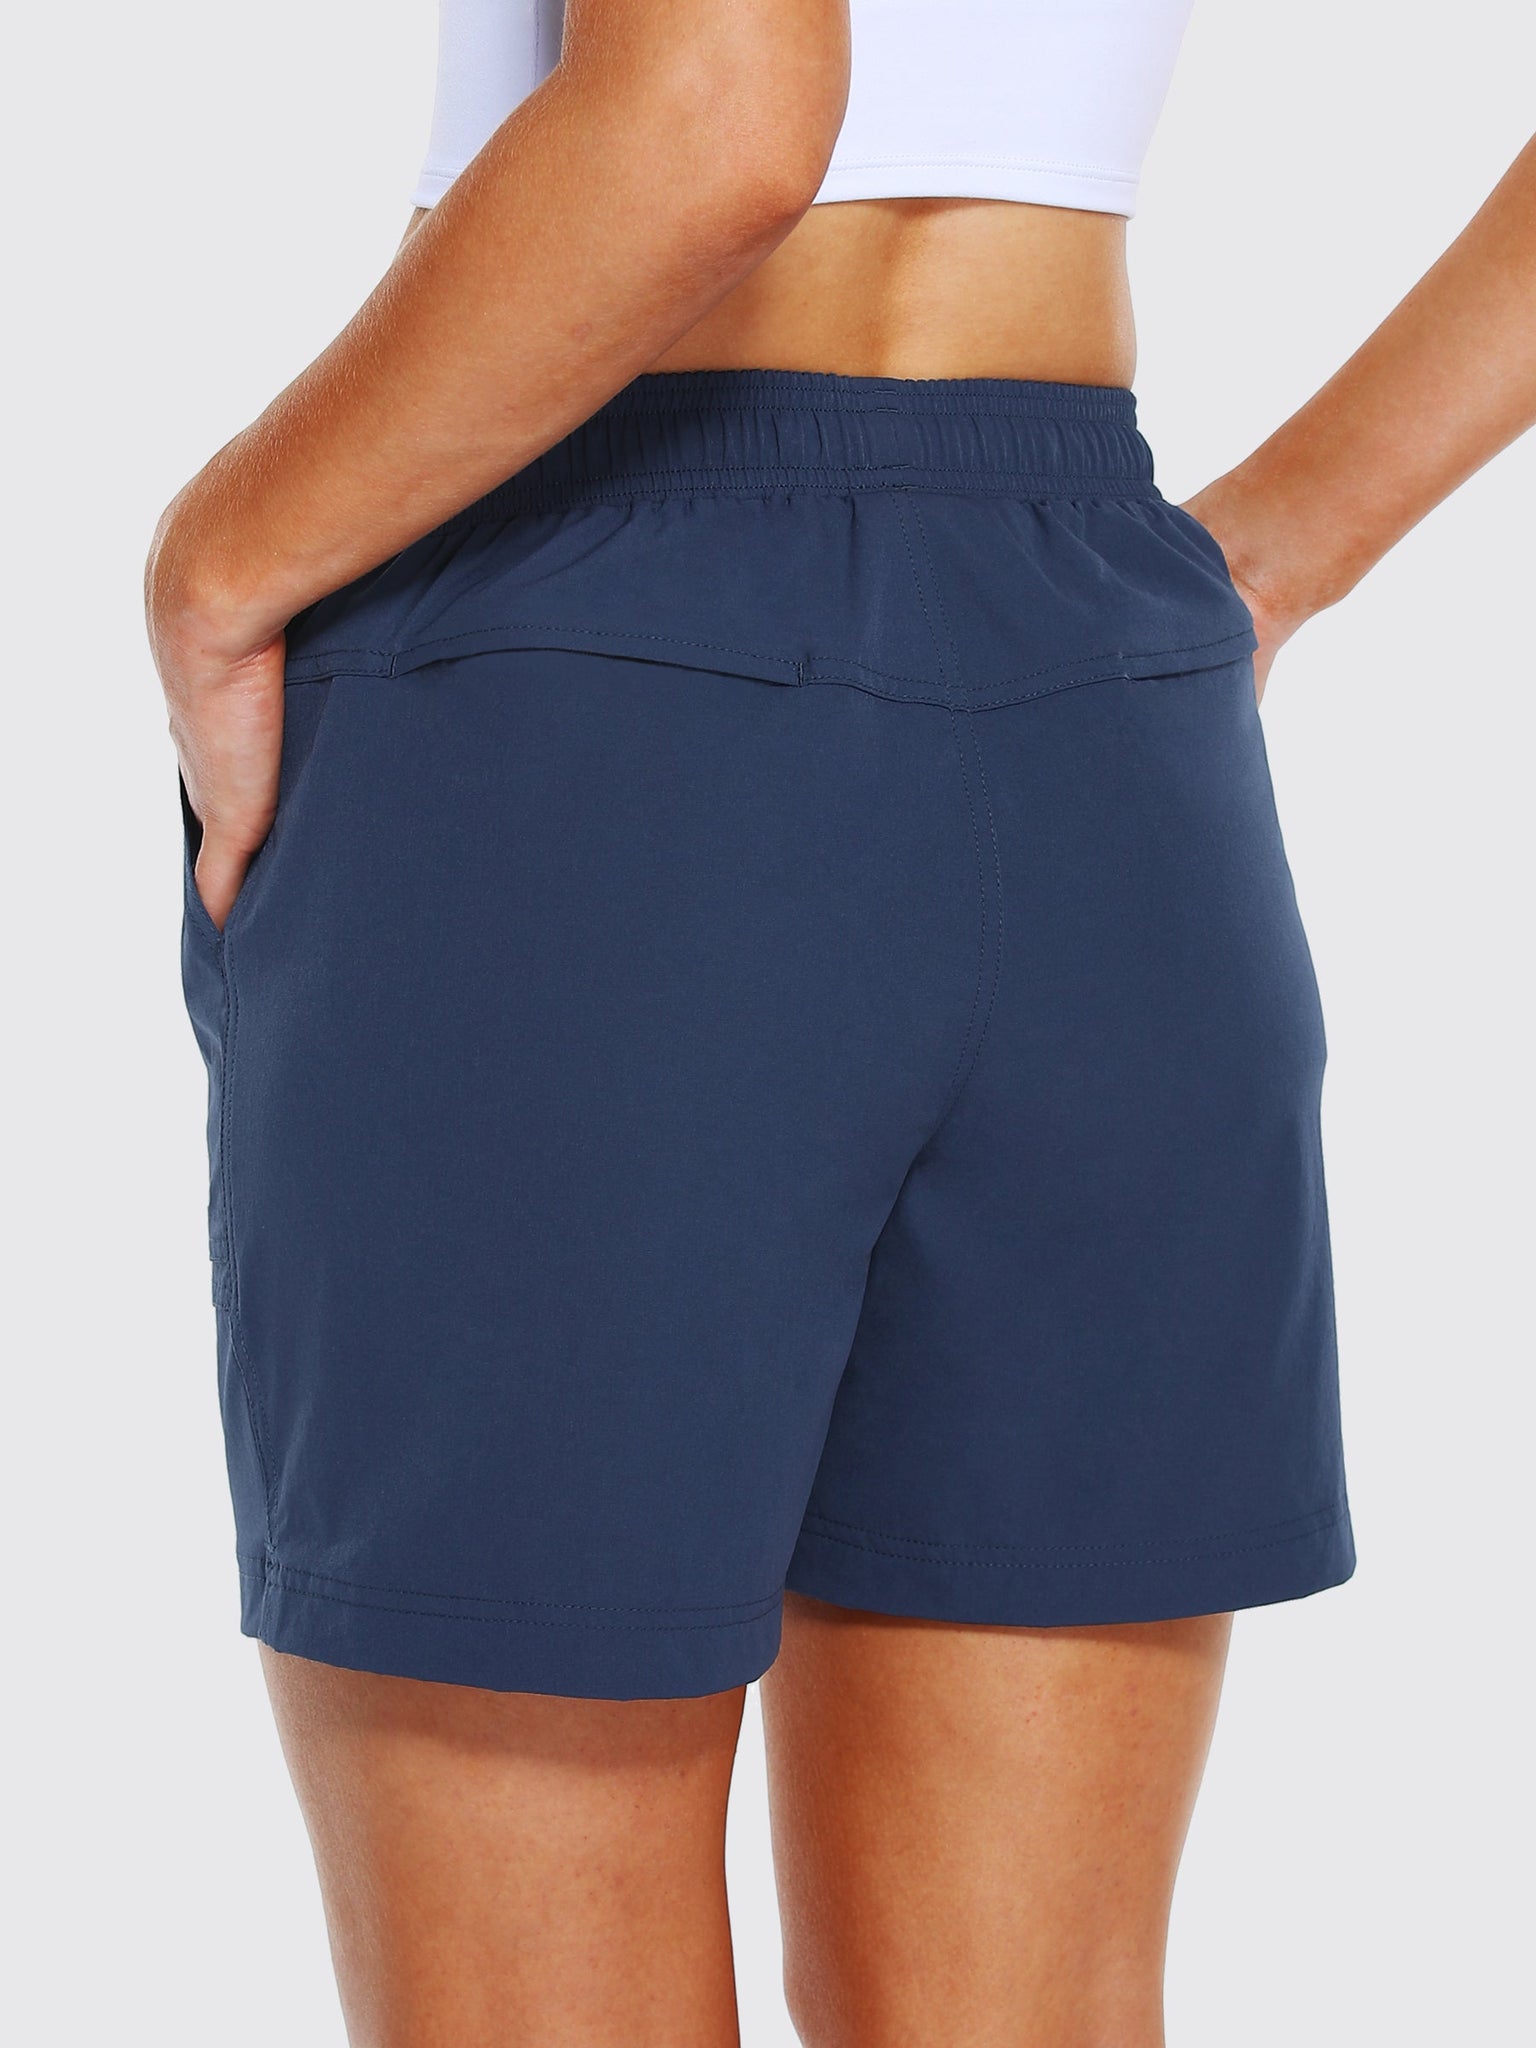 Willit Women's Hiking Golf Shorts_Navy3